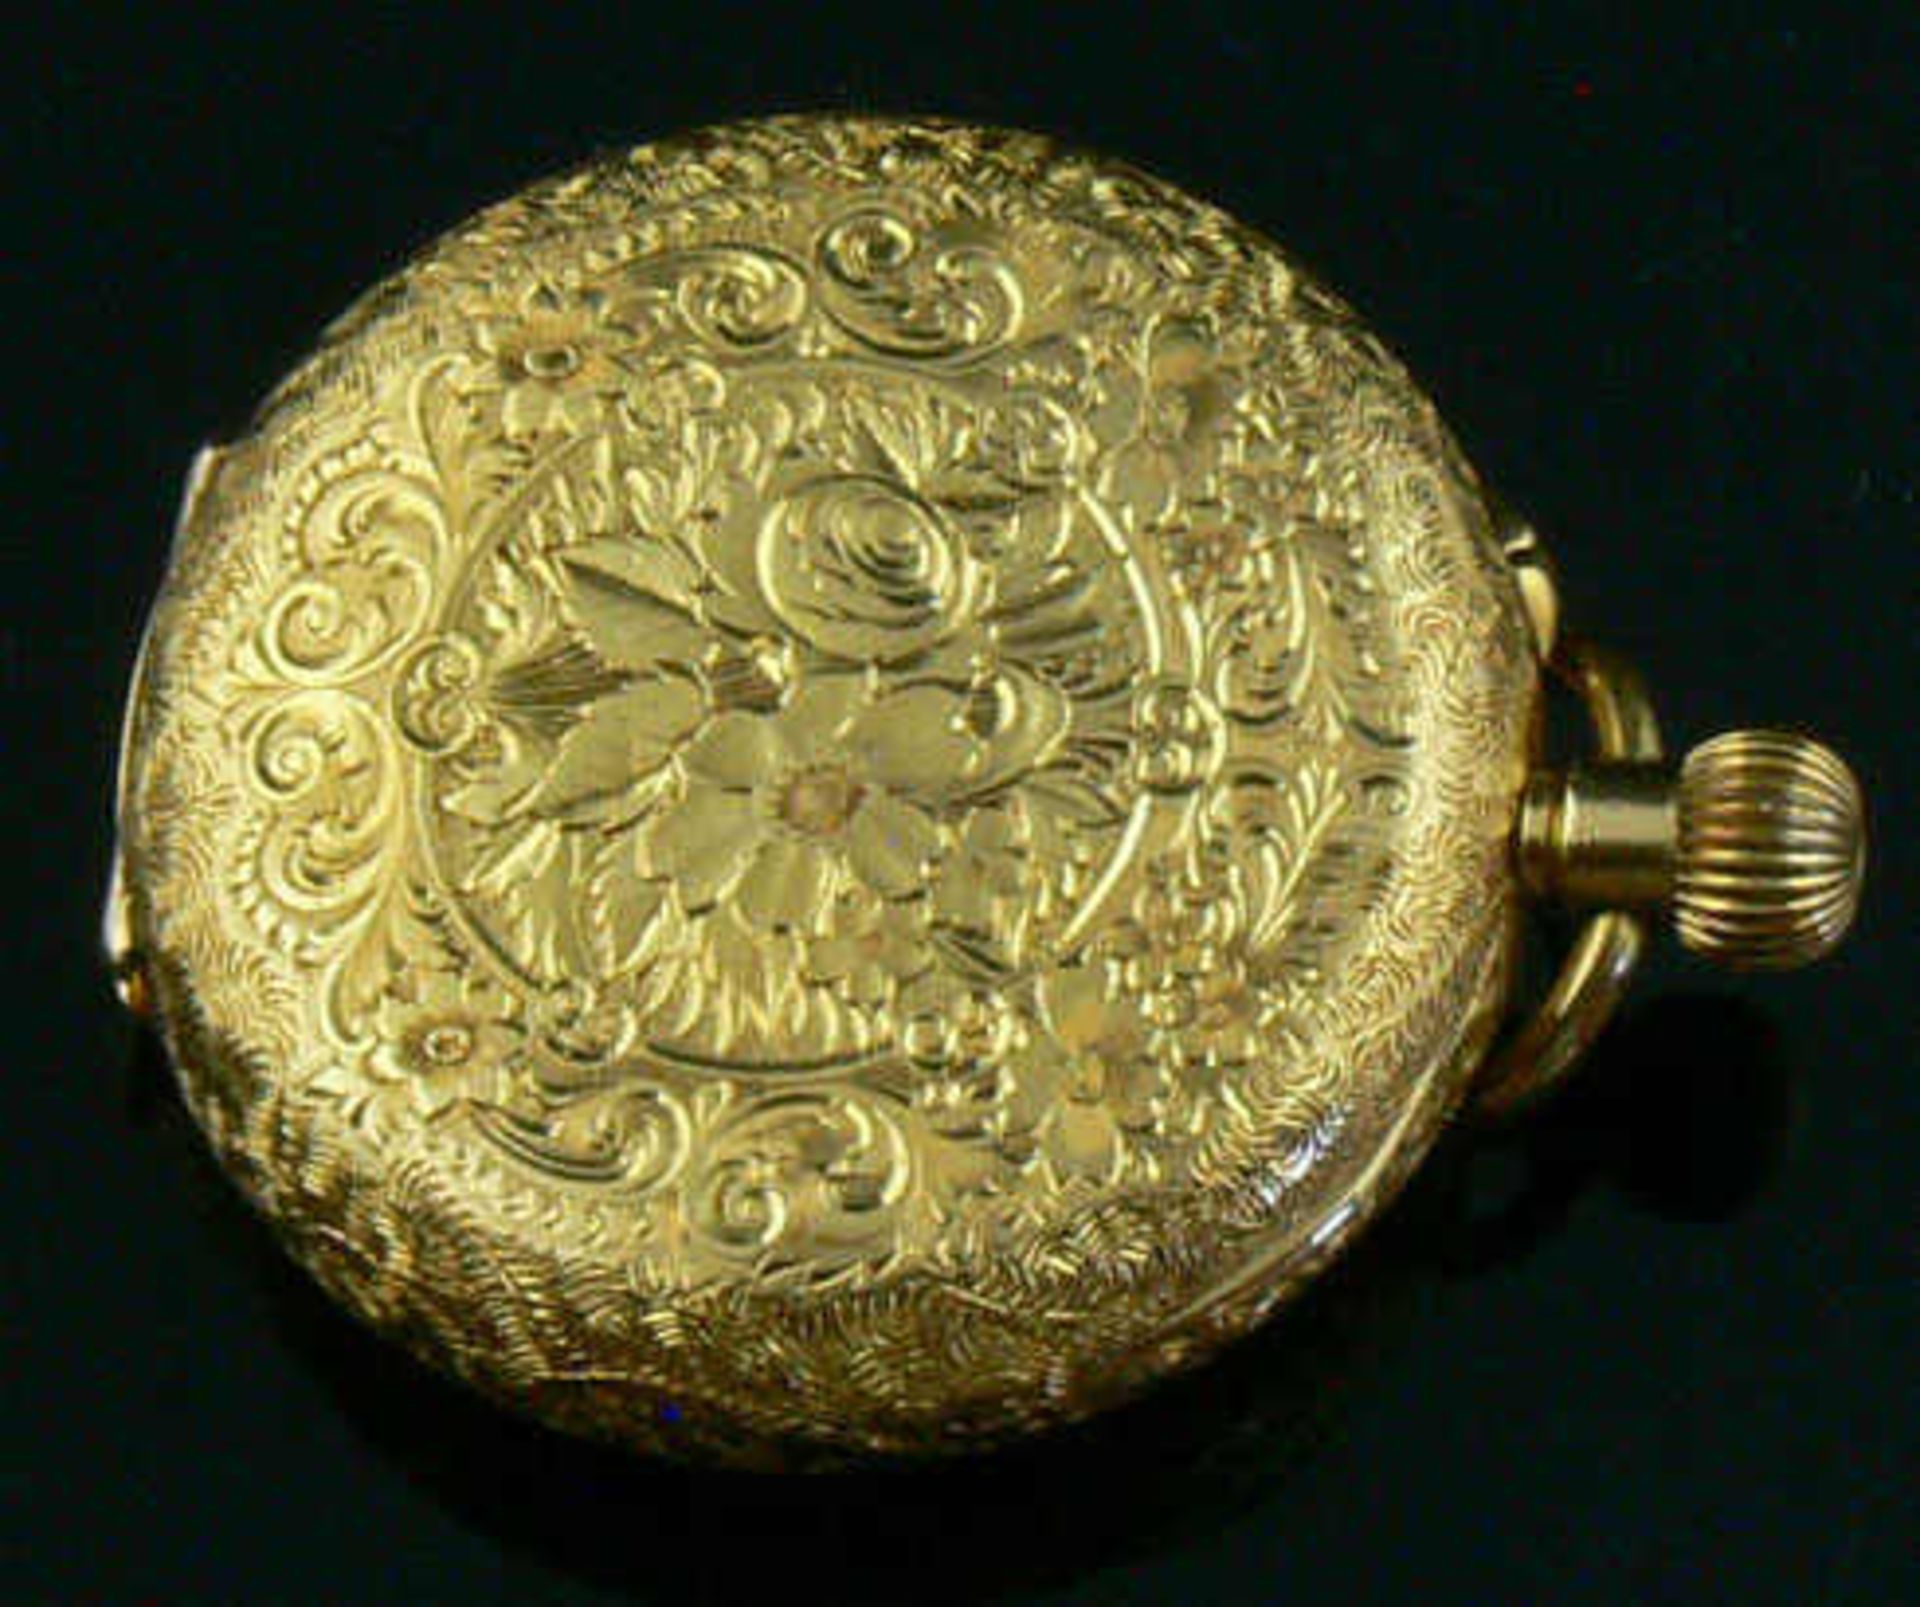 750er Gold Taschenuhr mit Emaille, ca 41,88 g. 750 gold pocket watch with enamel, about 41.88 g . - Image 2 of 2